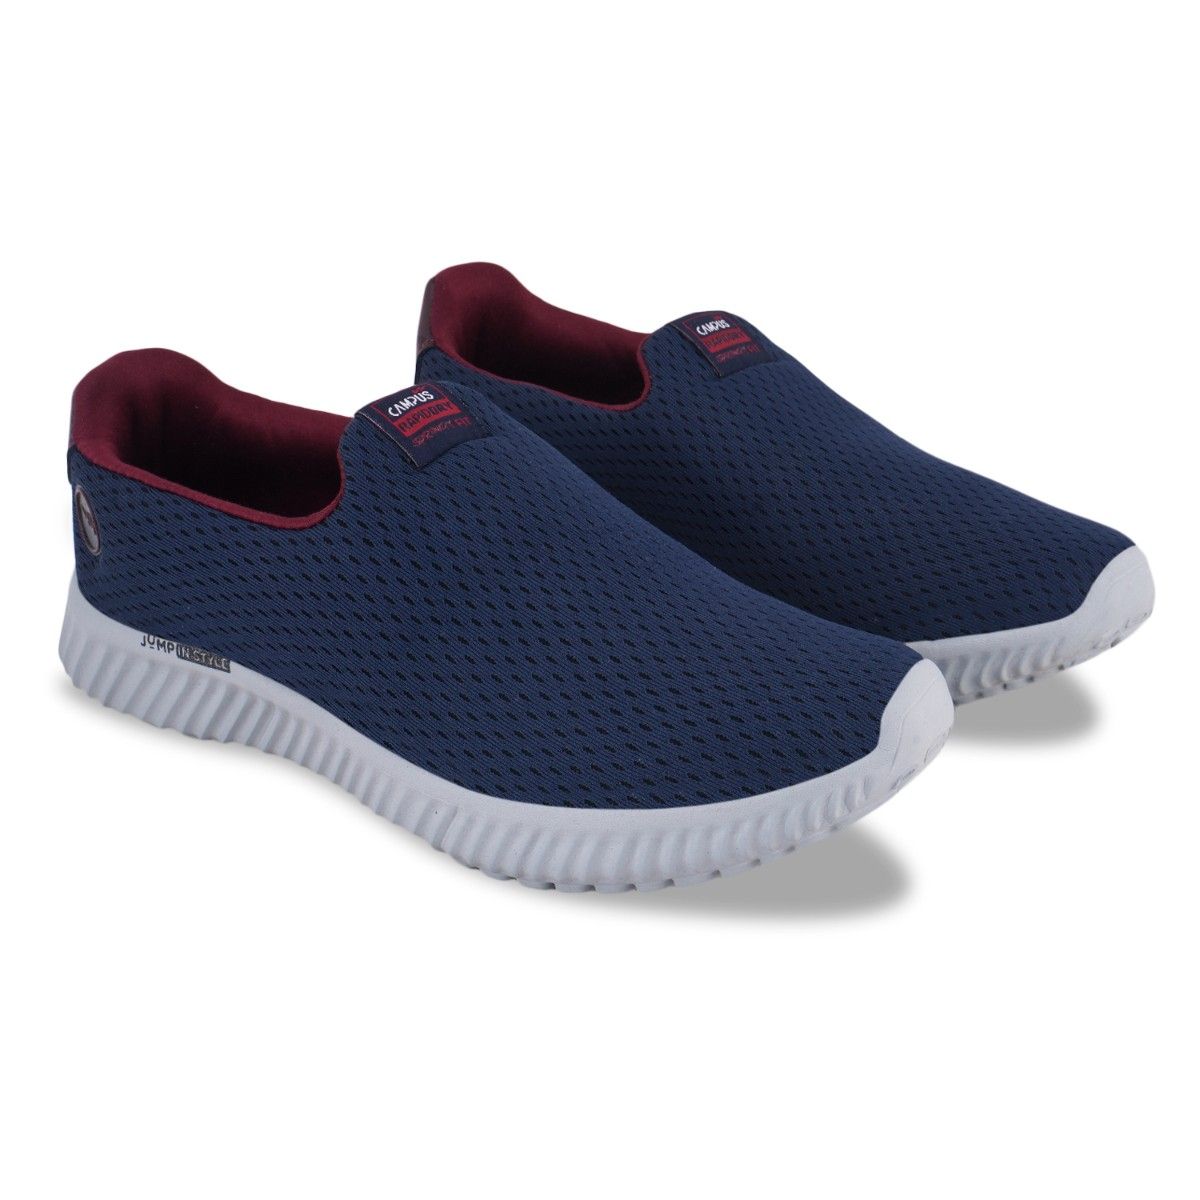 Campus Oxyfit Jr Shoes - Navy Blue: Buy Campus Oxyfit Jr Shoes - Navy ...